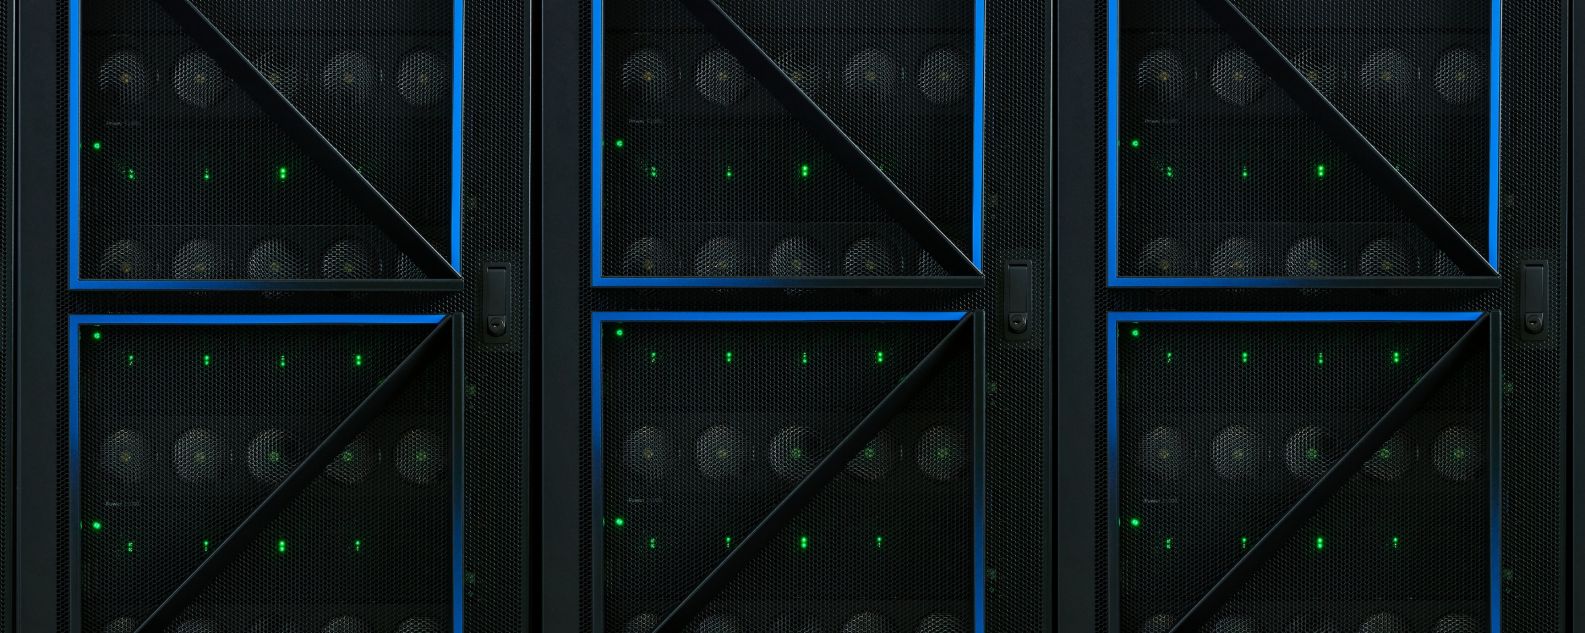 Un rack de servidores IBM Power